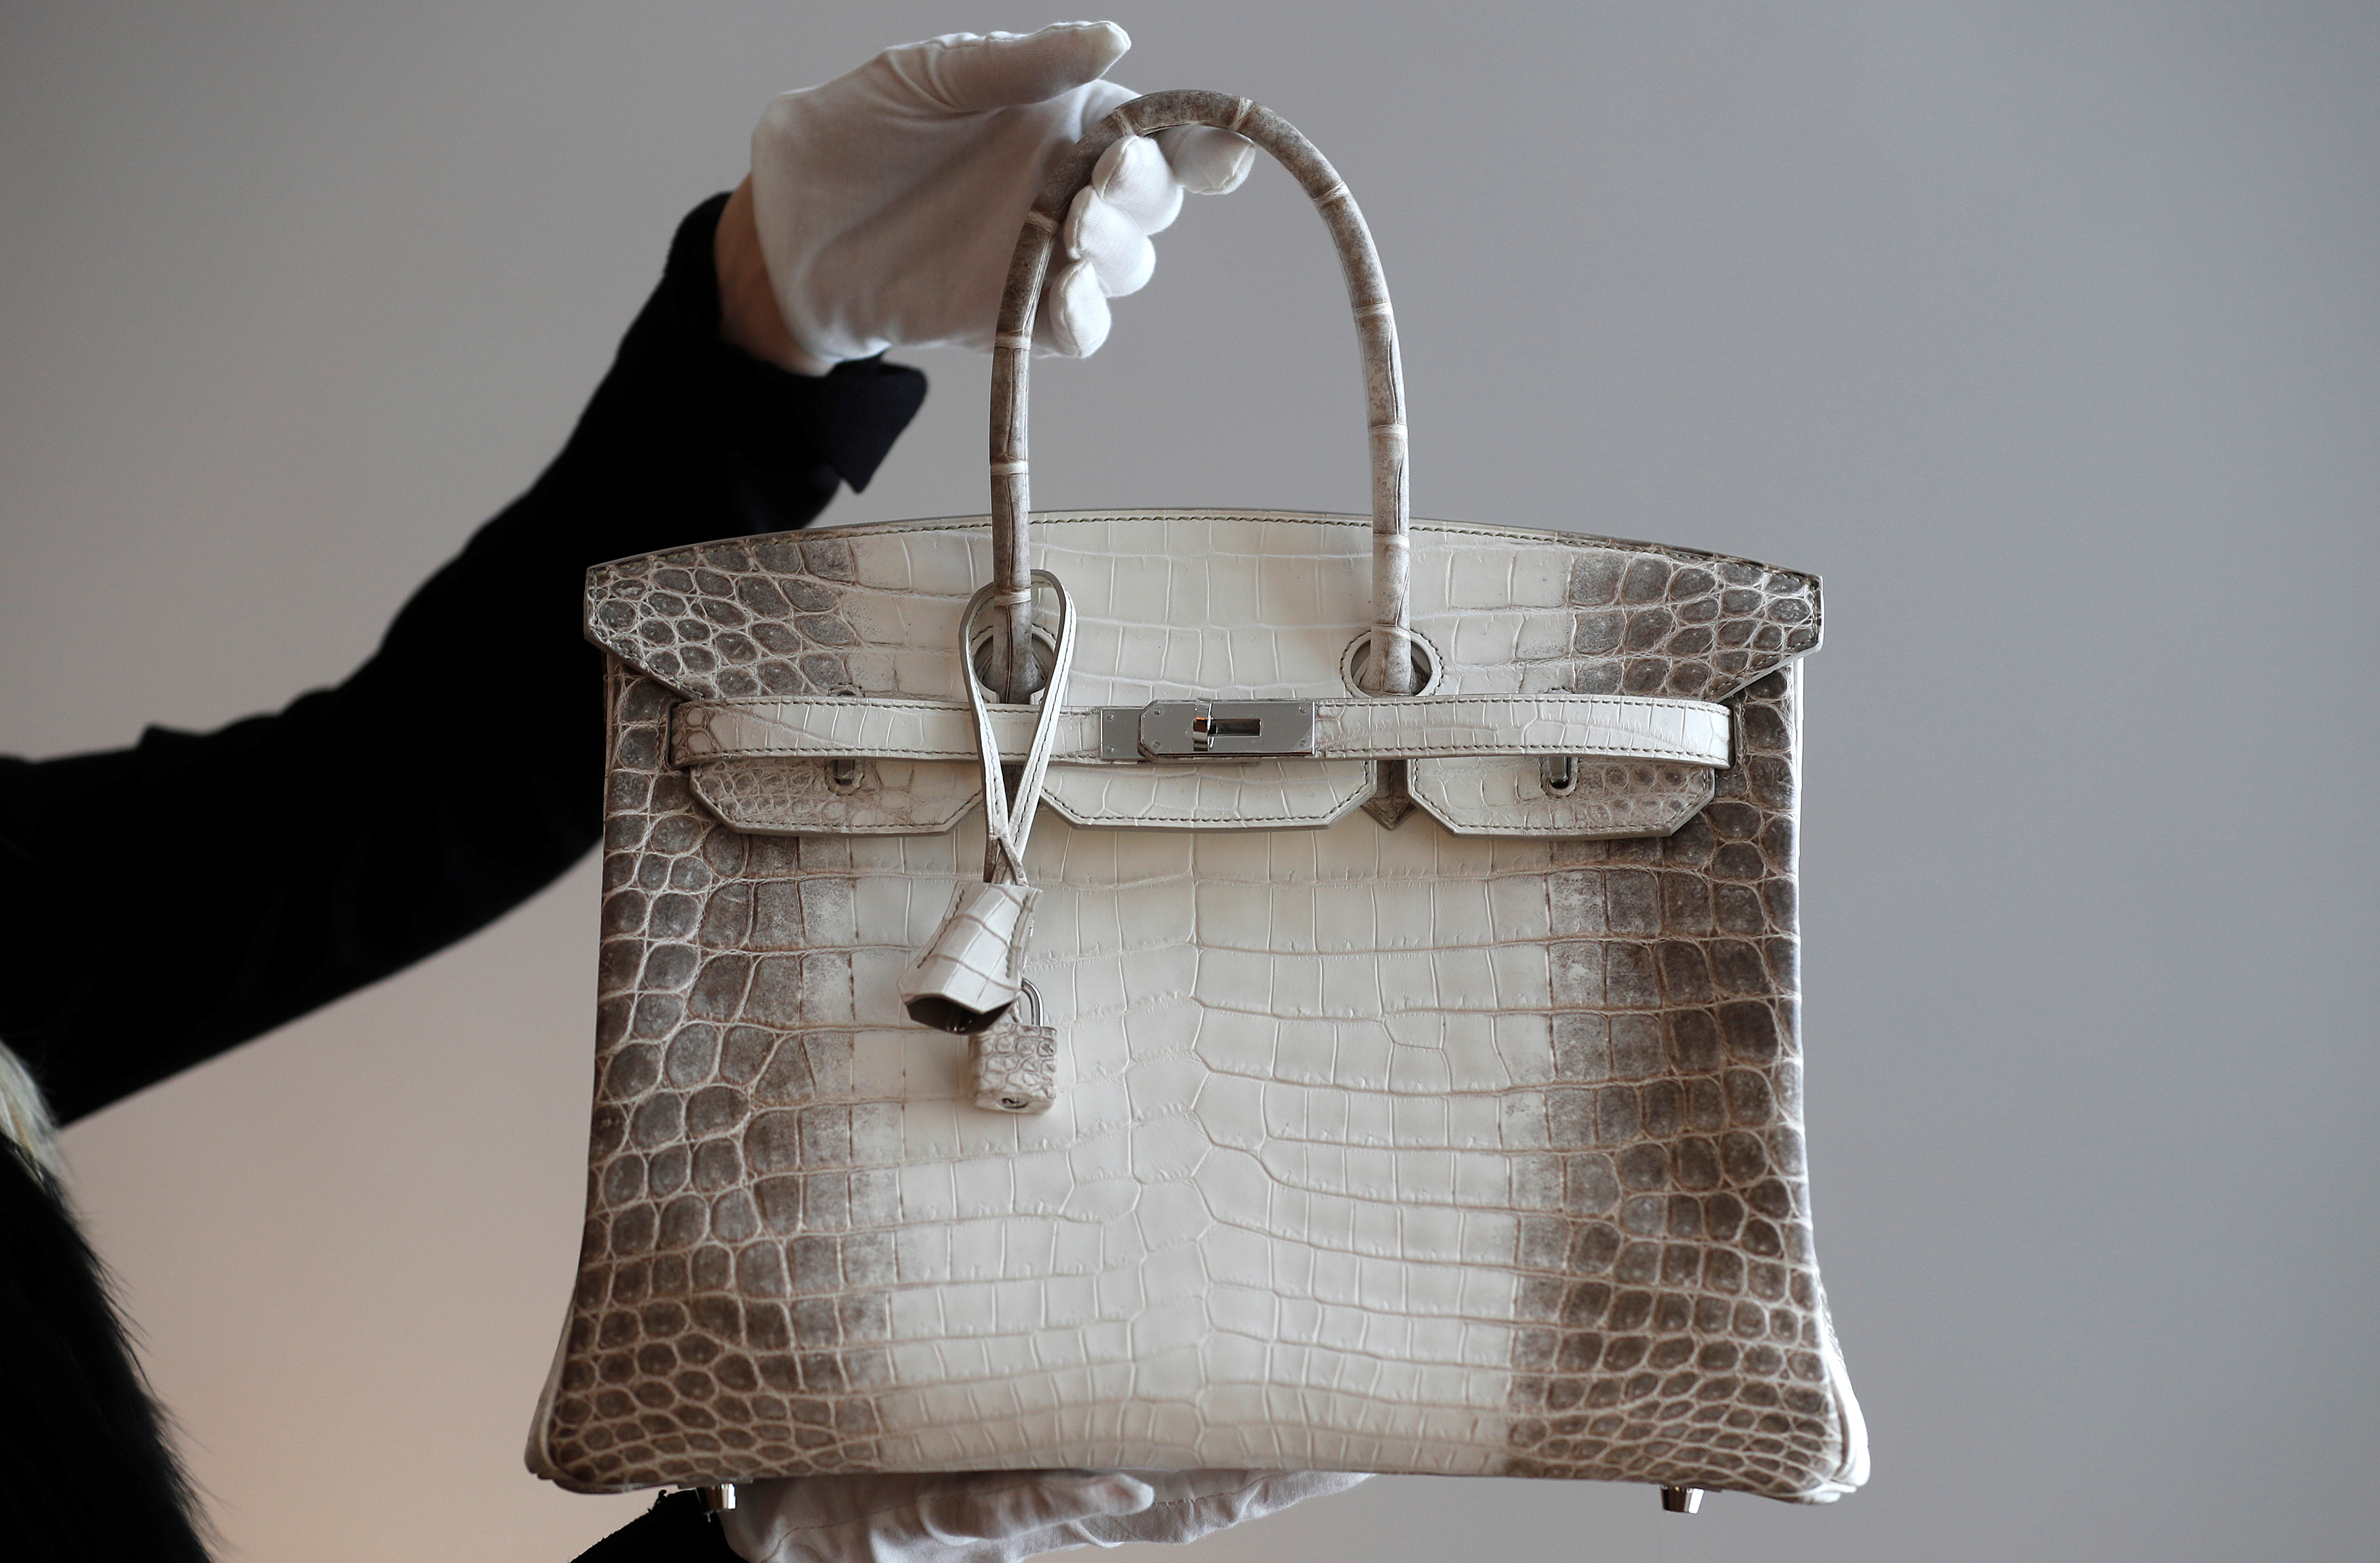 The world's most expensive handbag: an Hermès Birkin bag sells at